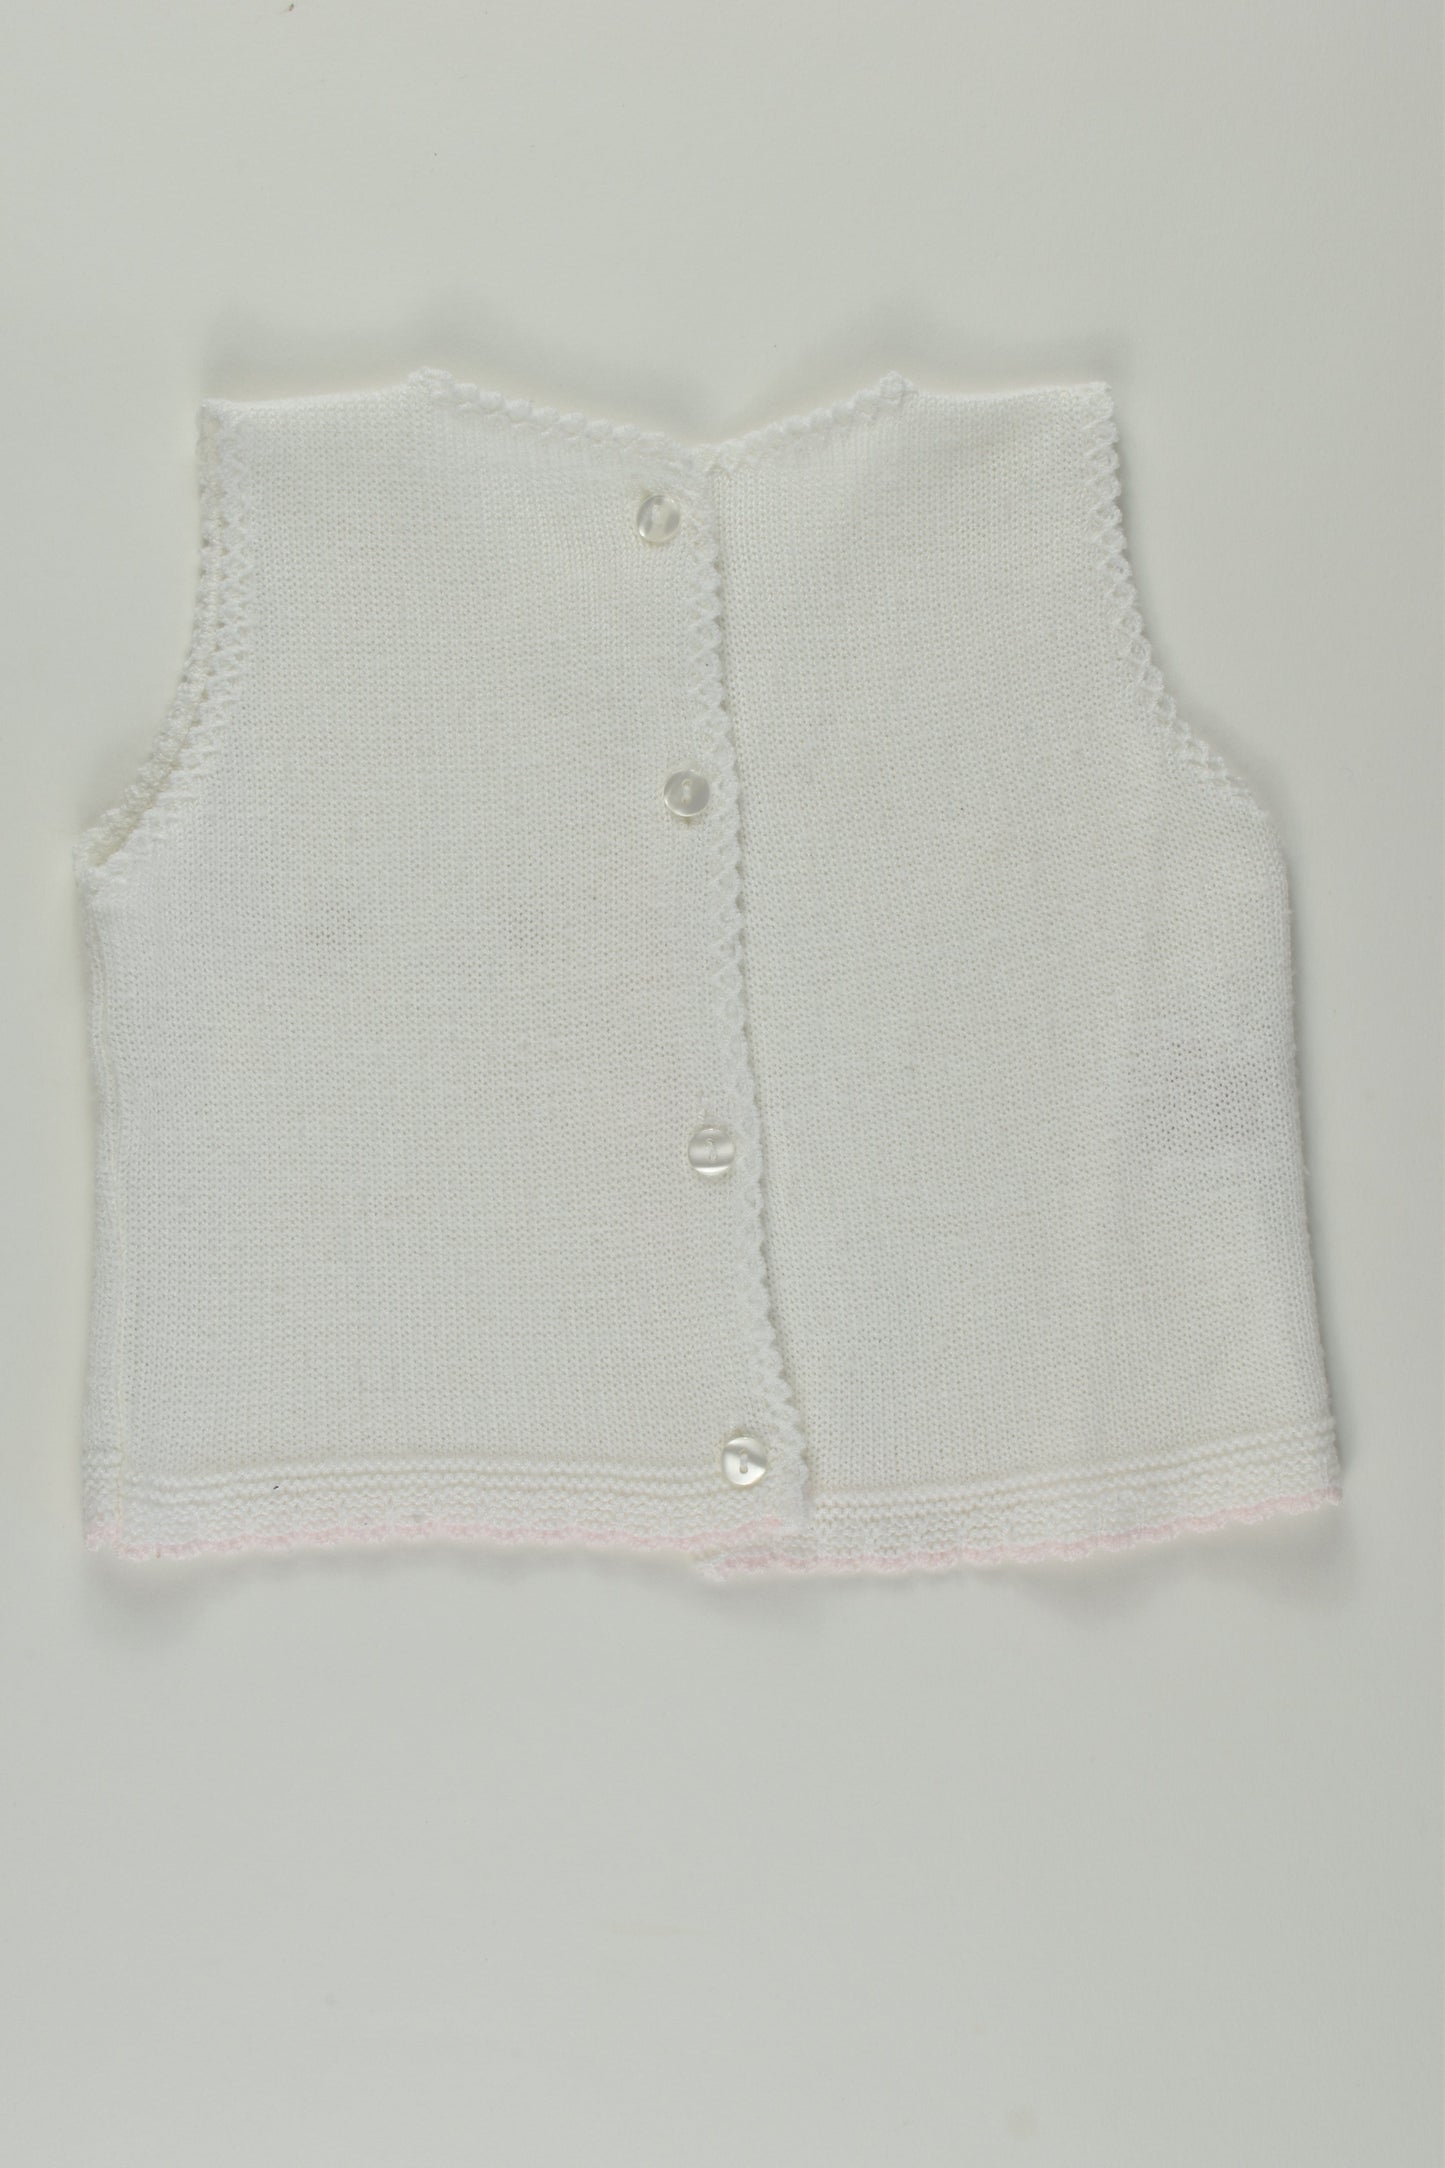 Prim Baby Size approx 00 Knit Vest